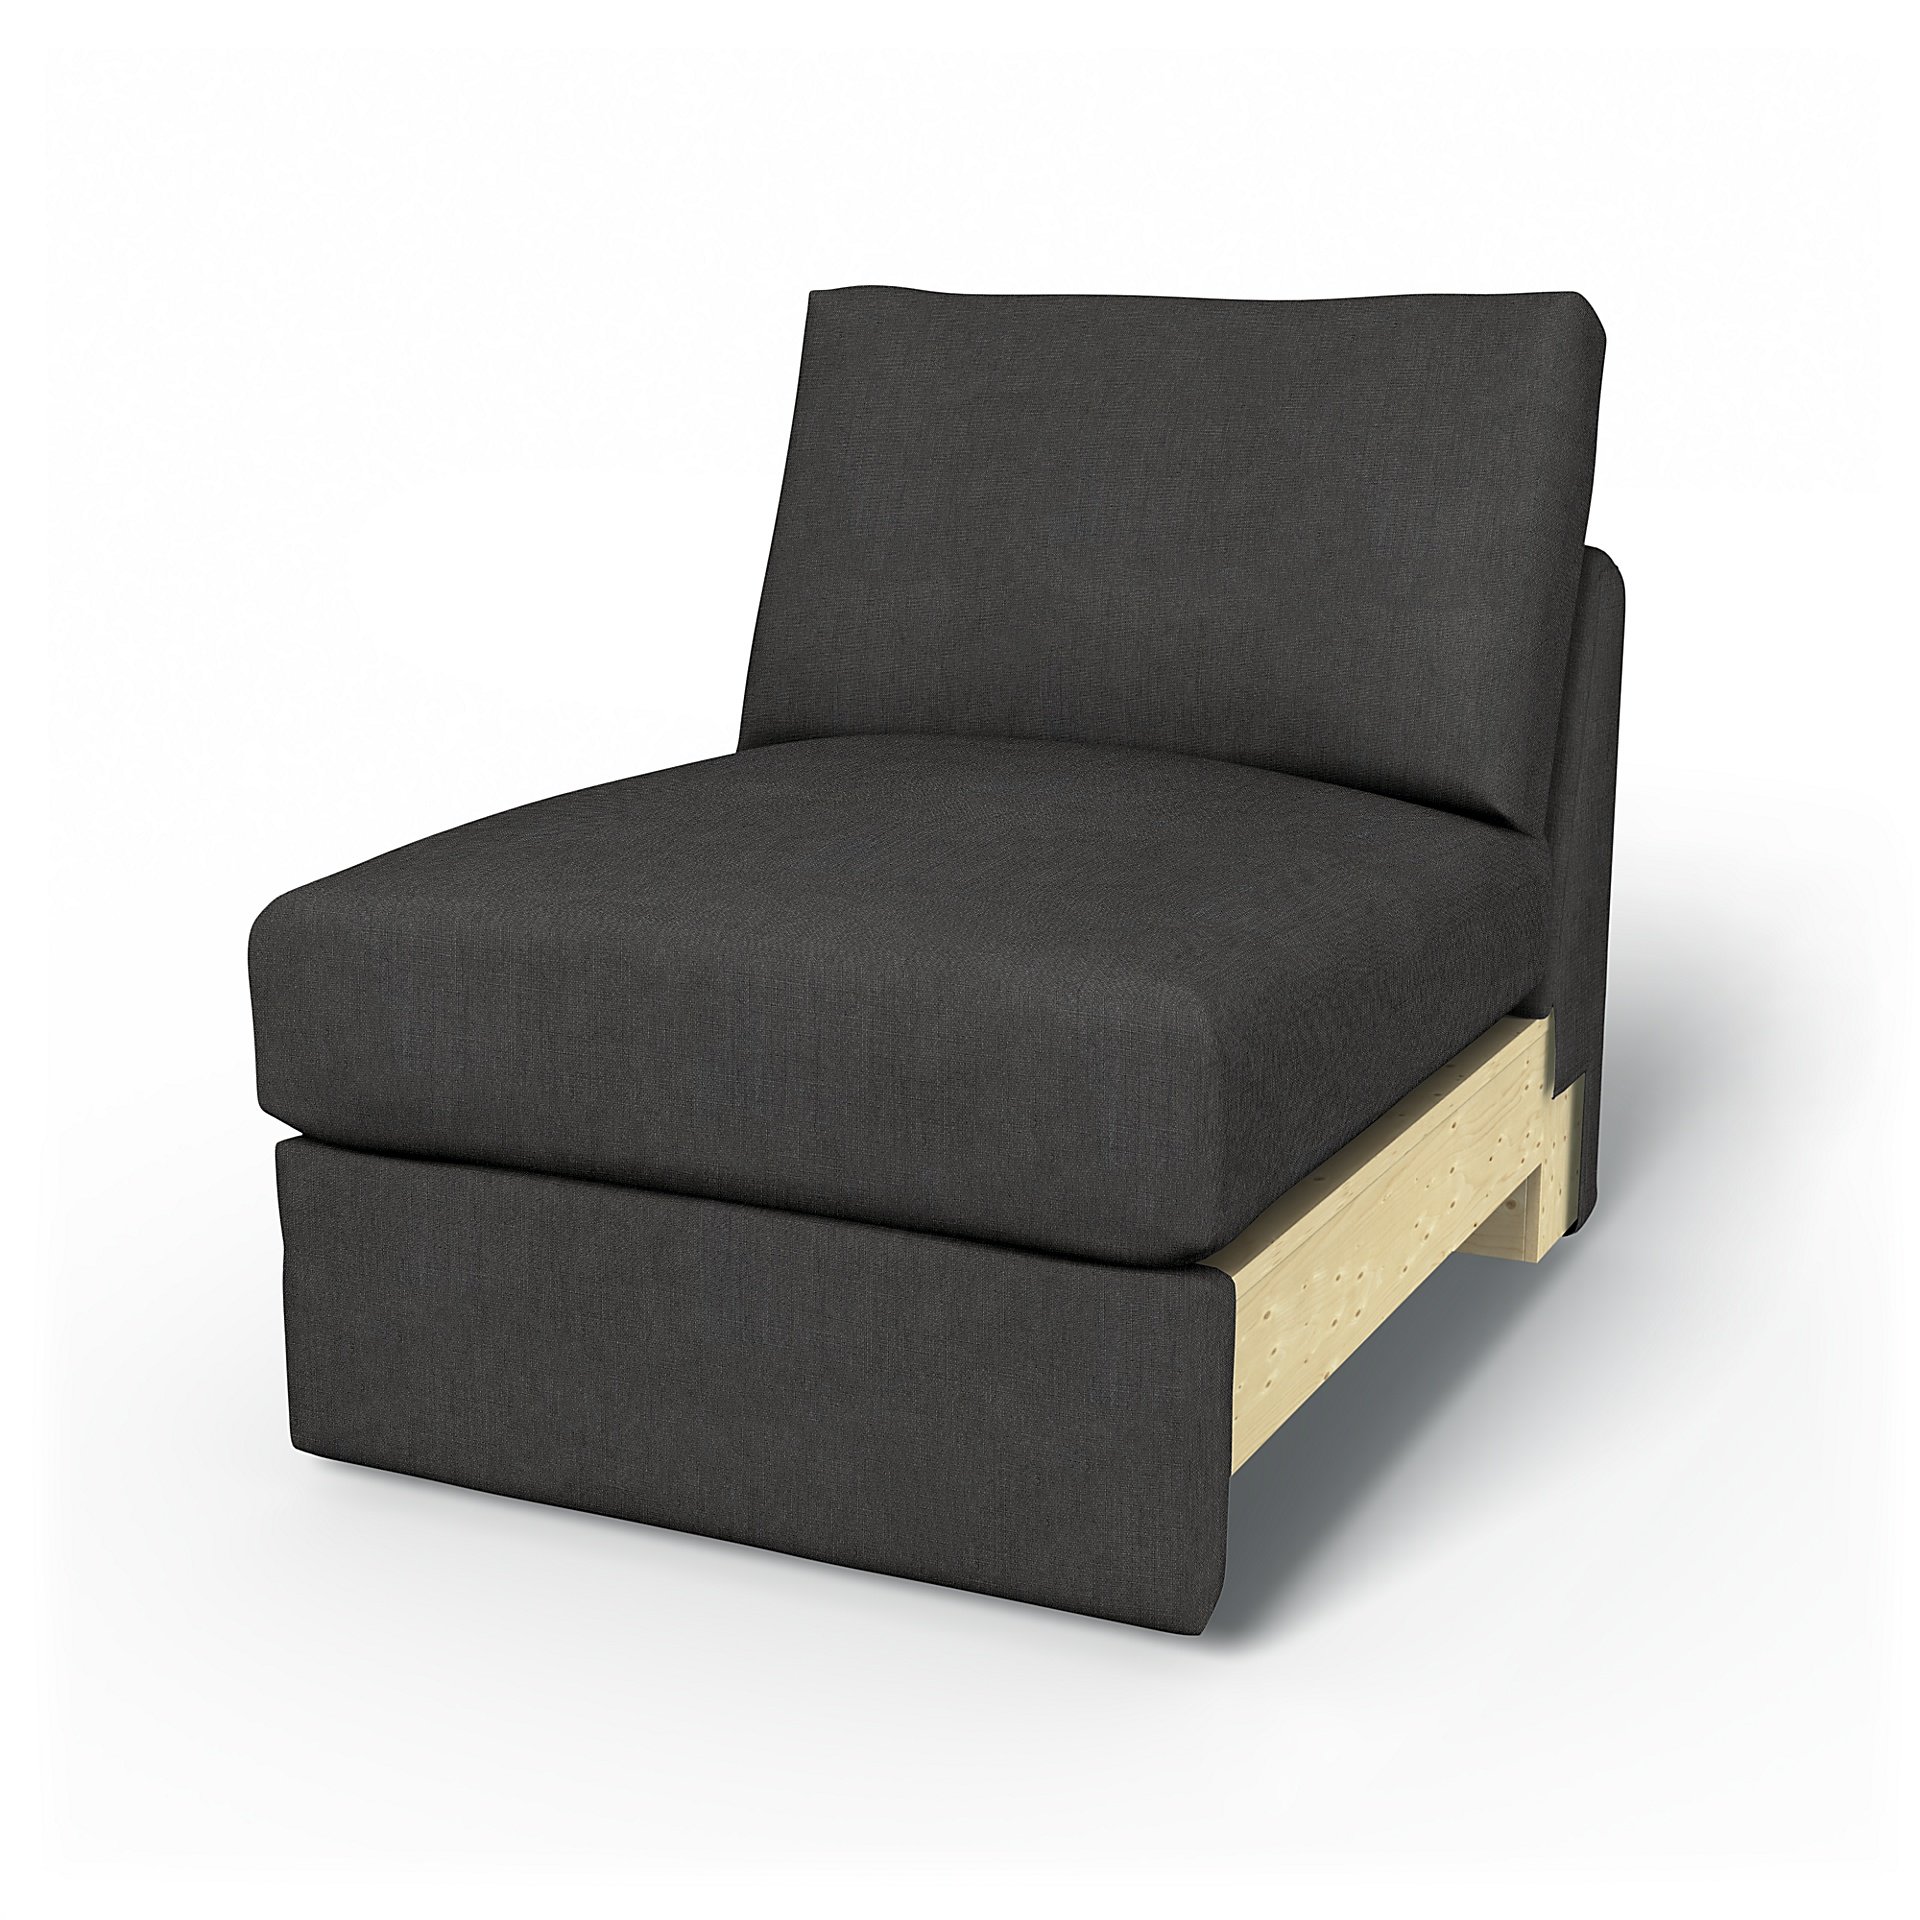 IKEA - Vimle 1 Seat Section Cover, Espresso, Linen - Bemz